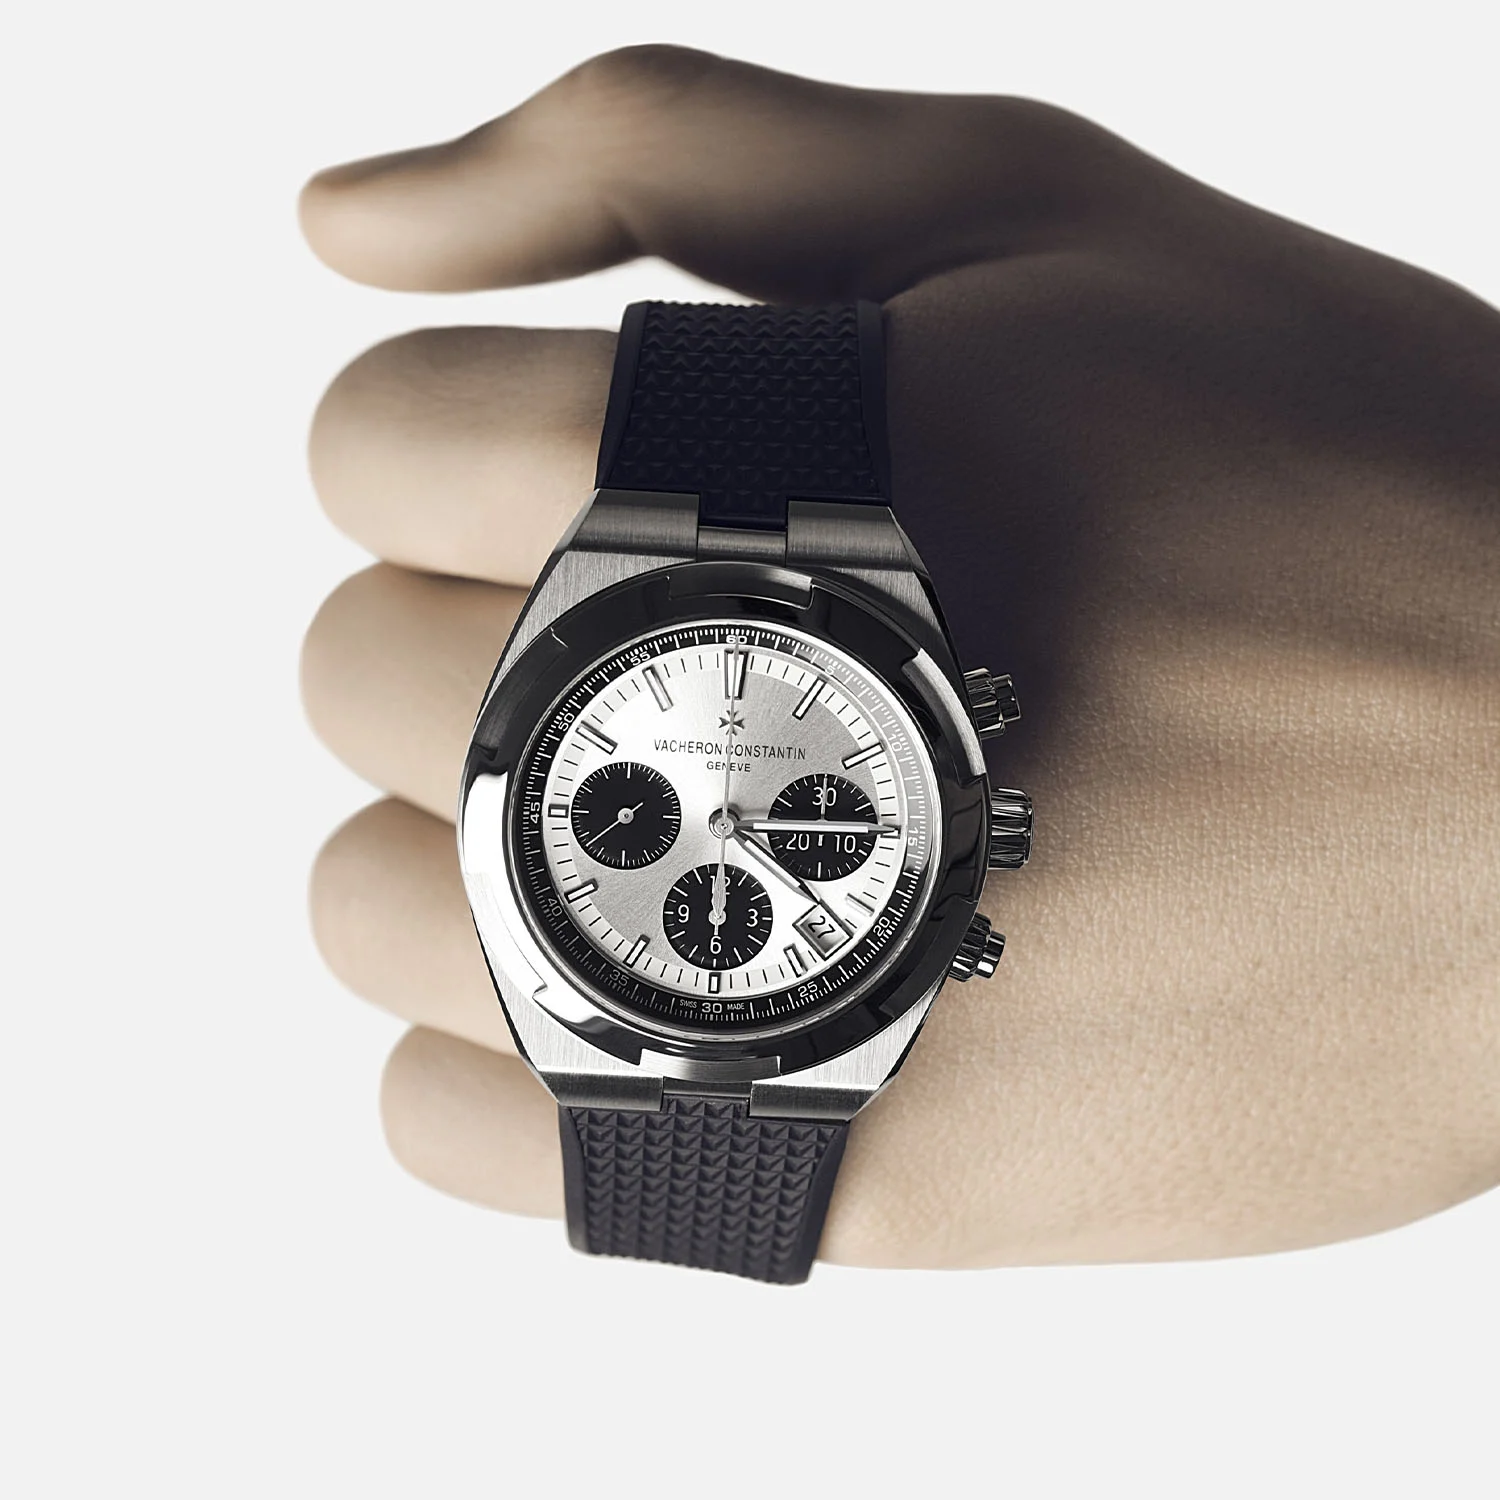 Introducing The New Vacheron Constantin Overseas Chronograph Watch